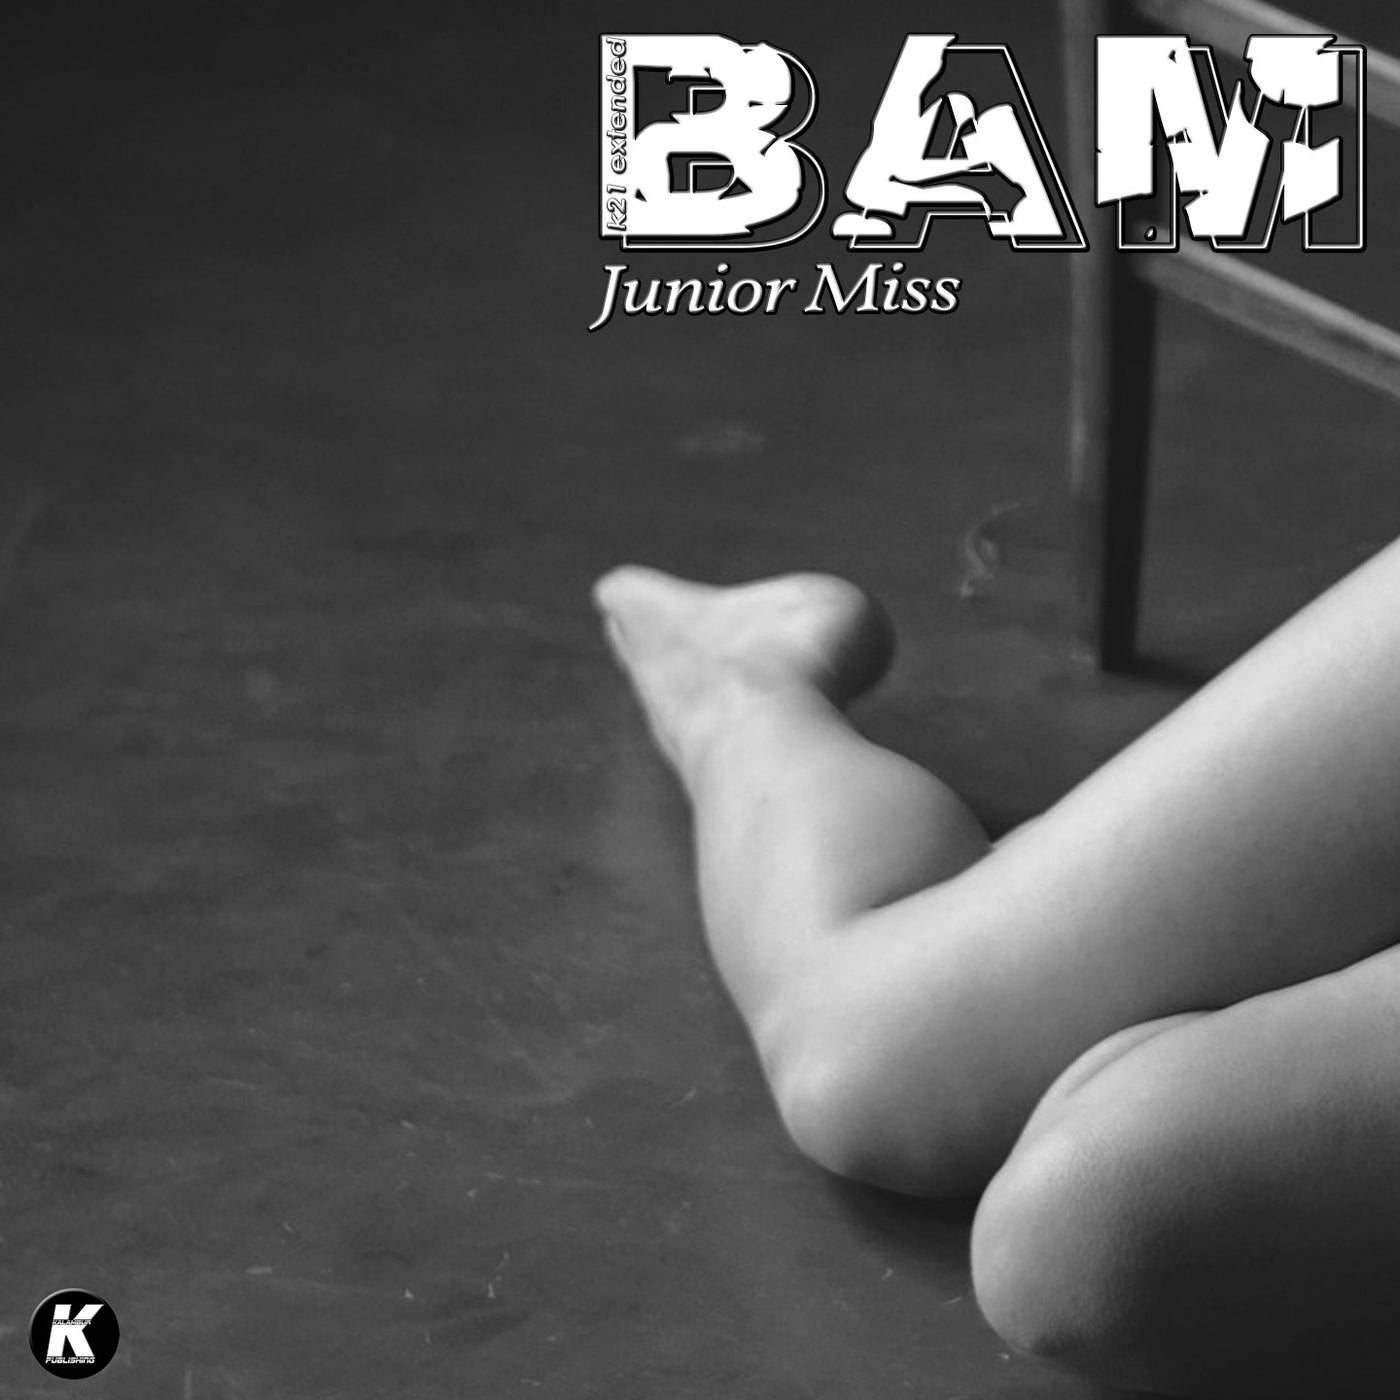 Junior Miss (K21 Extended)